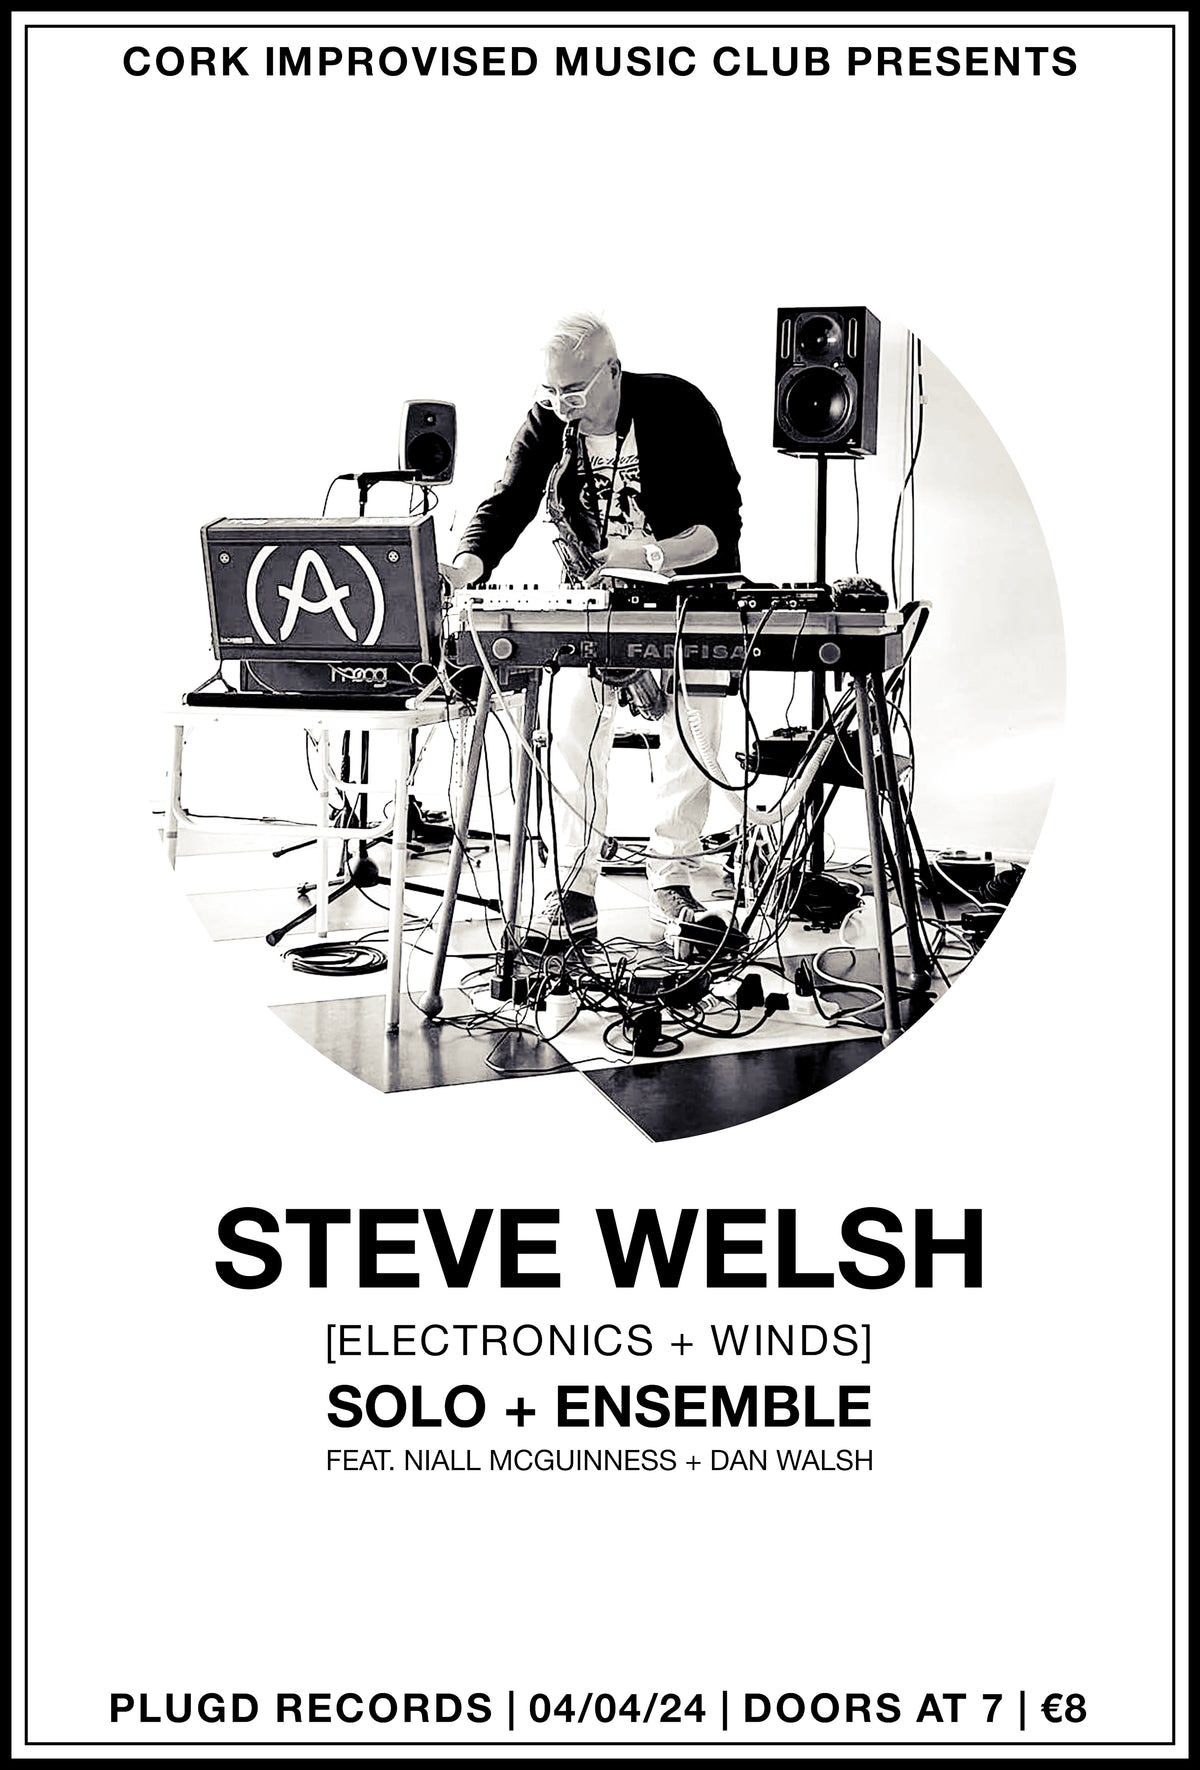 Steve Welsh - Solo &amp; Ensemble w Dan Walsh &amp; Niall McGuinness